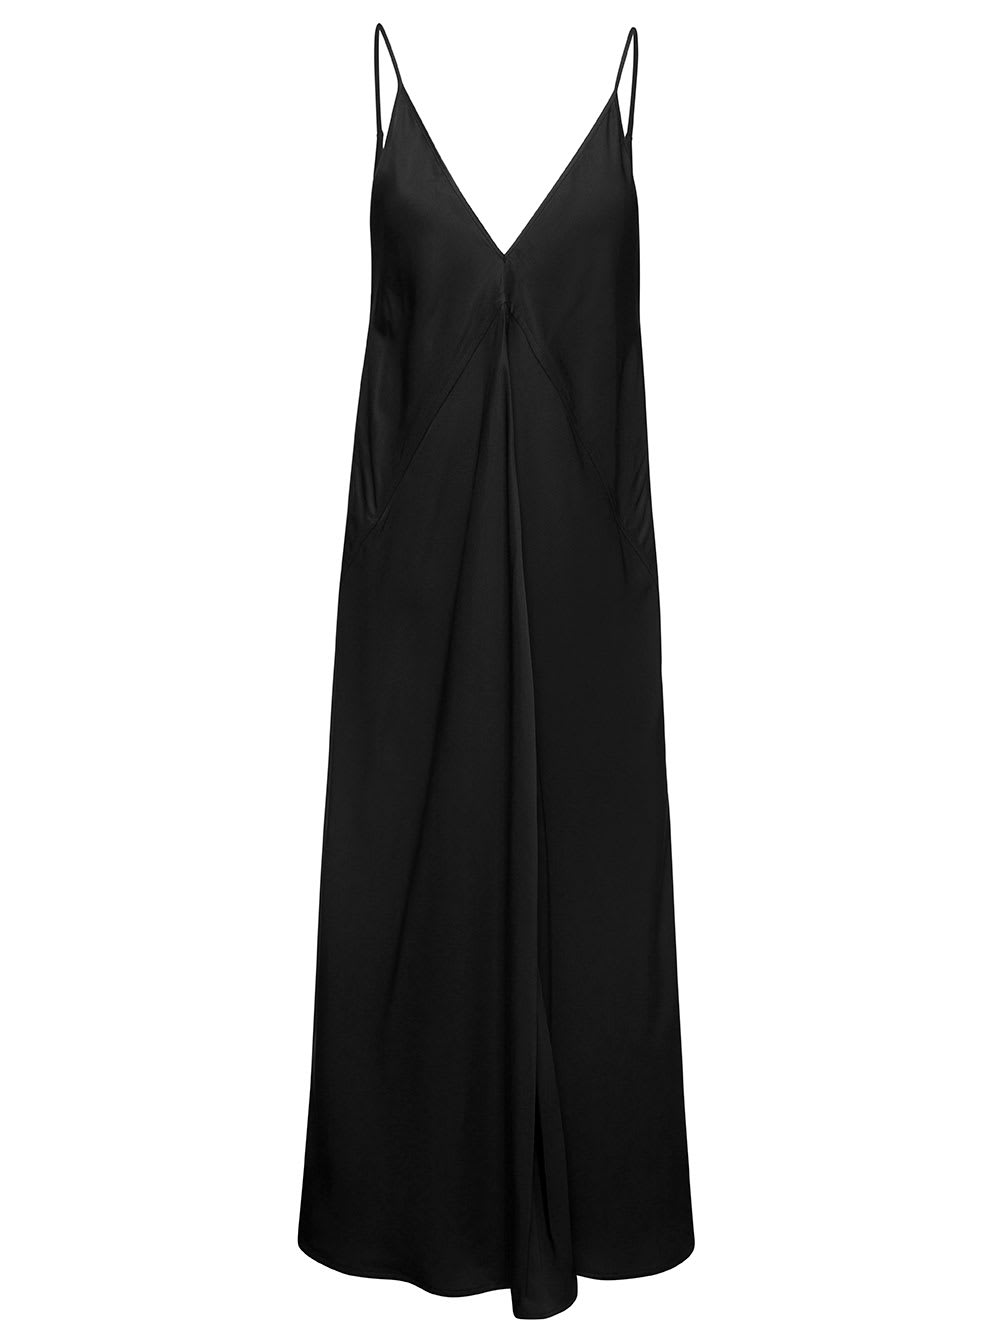 JIL SANDER BLACK CALF LENGHT V-NECK SLIP DRESS, WITH FULL SKIRT AND DIAGONAL CUT, IN VISCOSE WOMAN